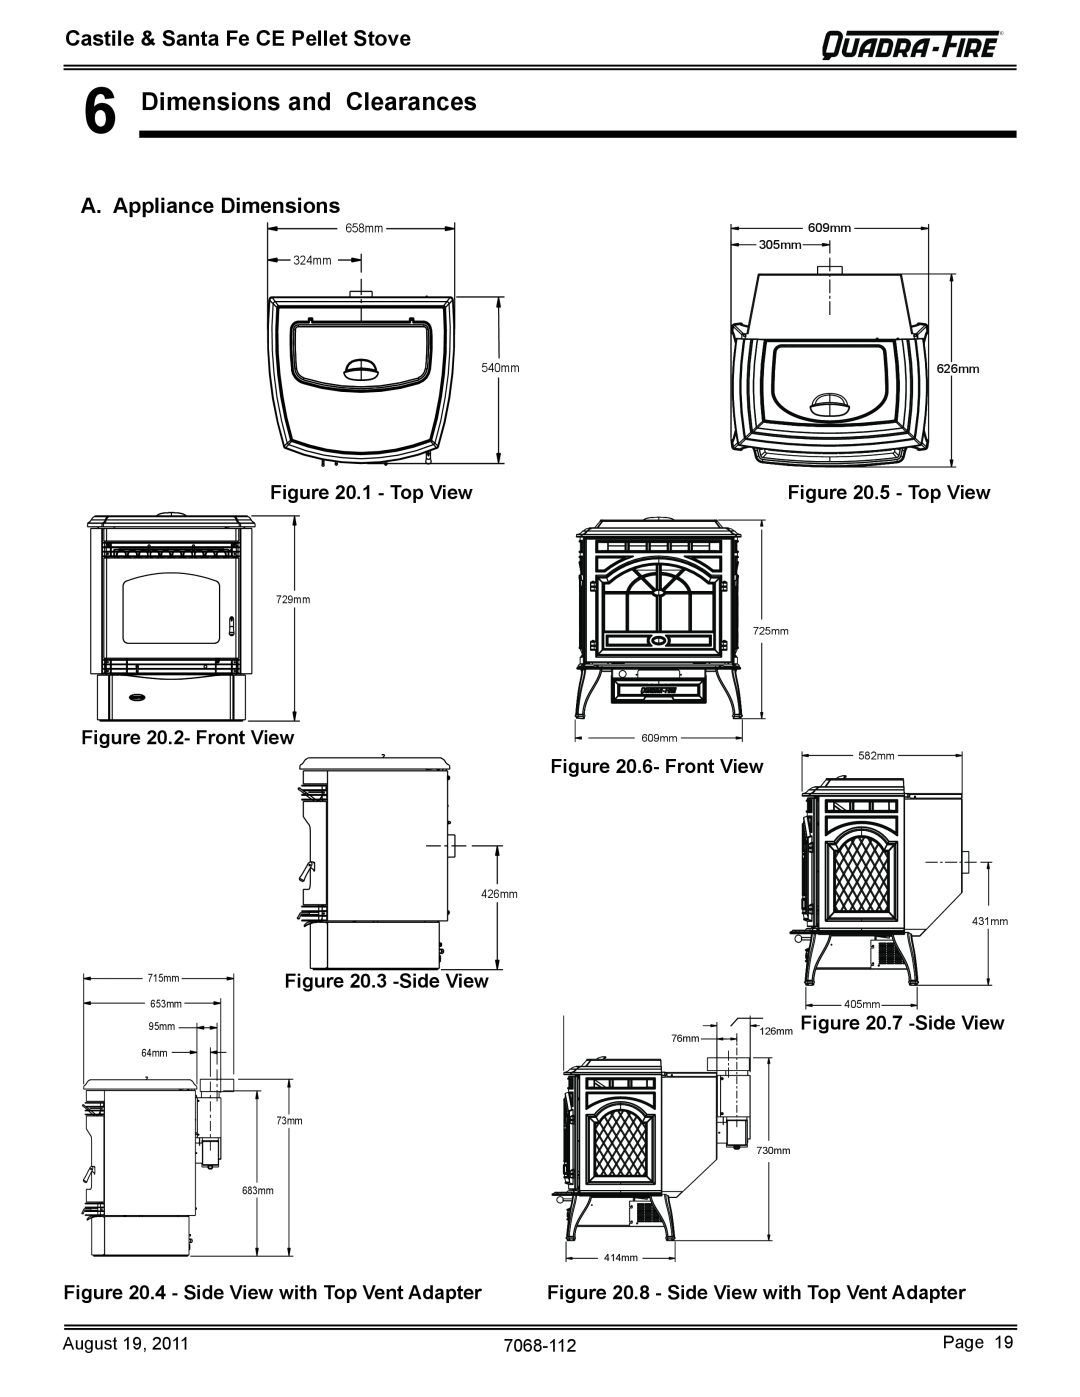 Quadra-Fire 7068-112 owner manual Dimensions and Clearances, A. Appliance Dimensions, Castile & Santa Fe CE Pellet Stove 